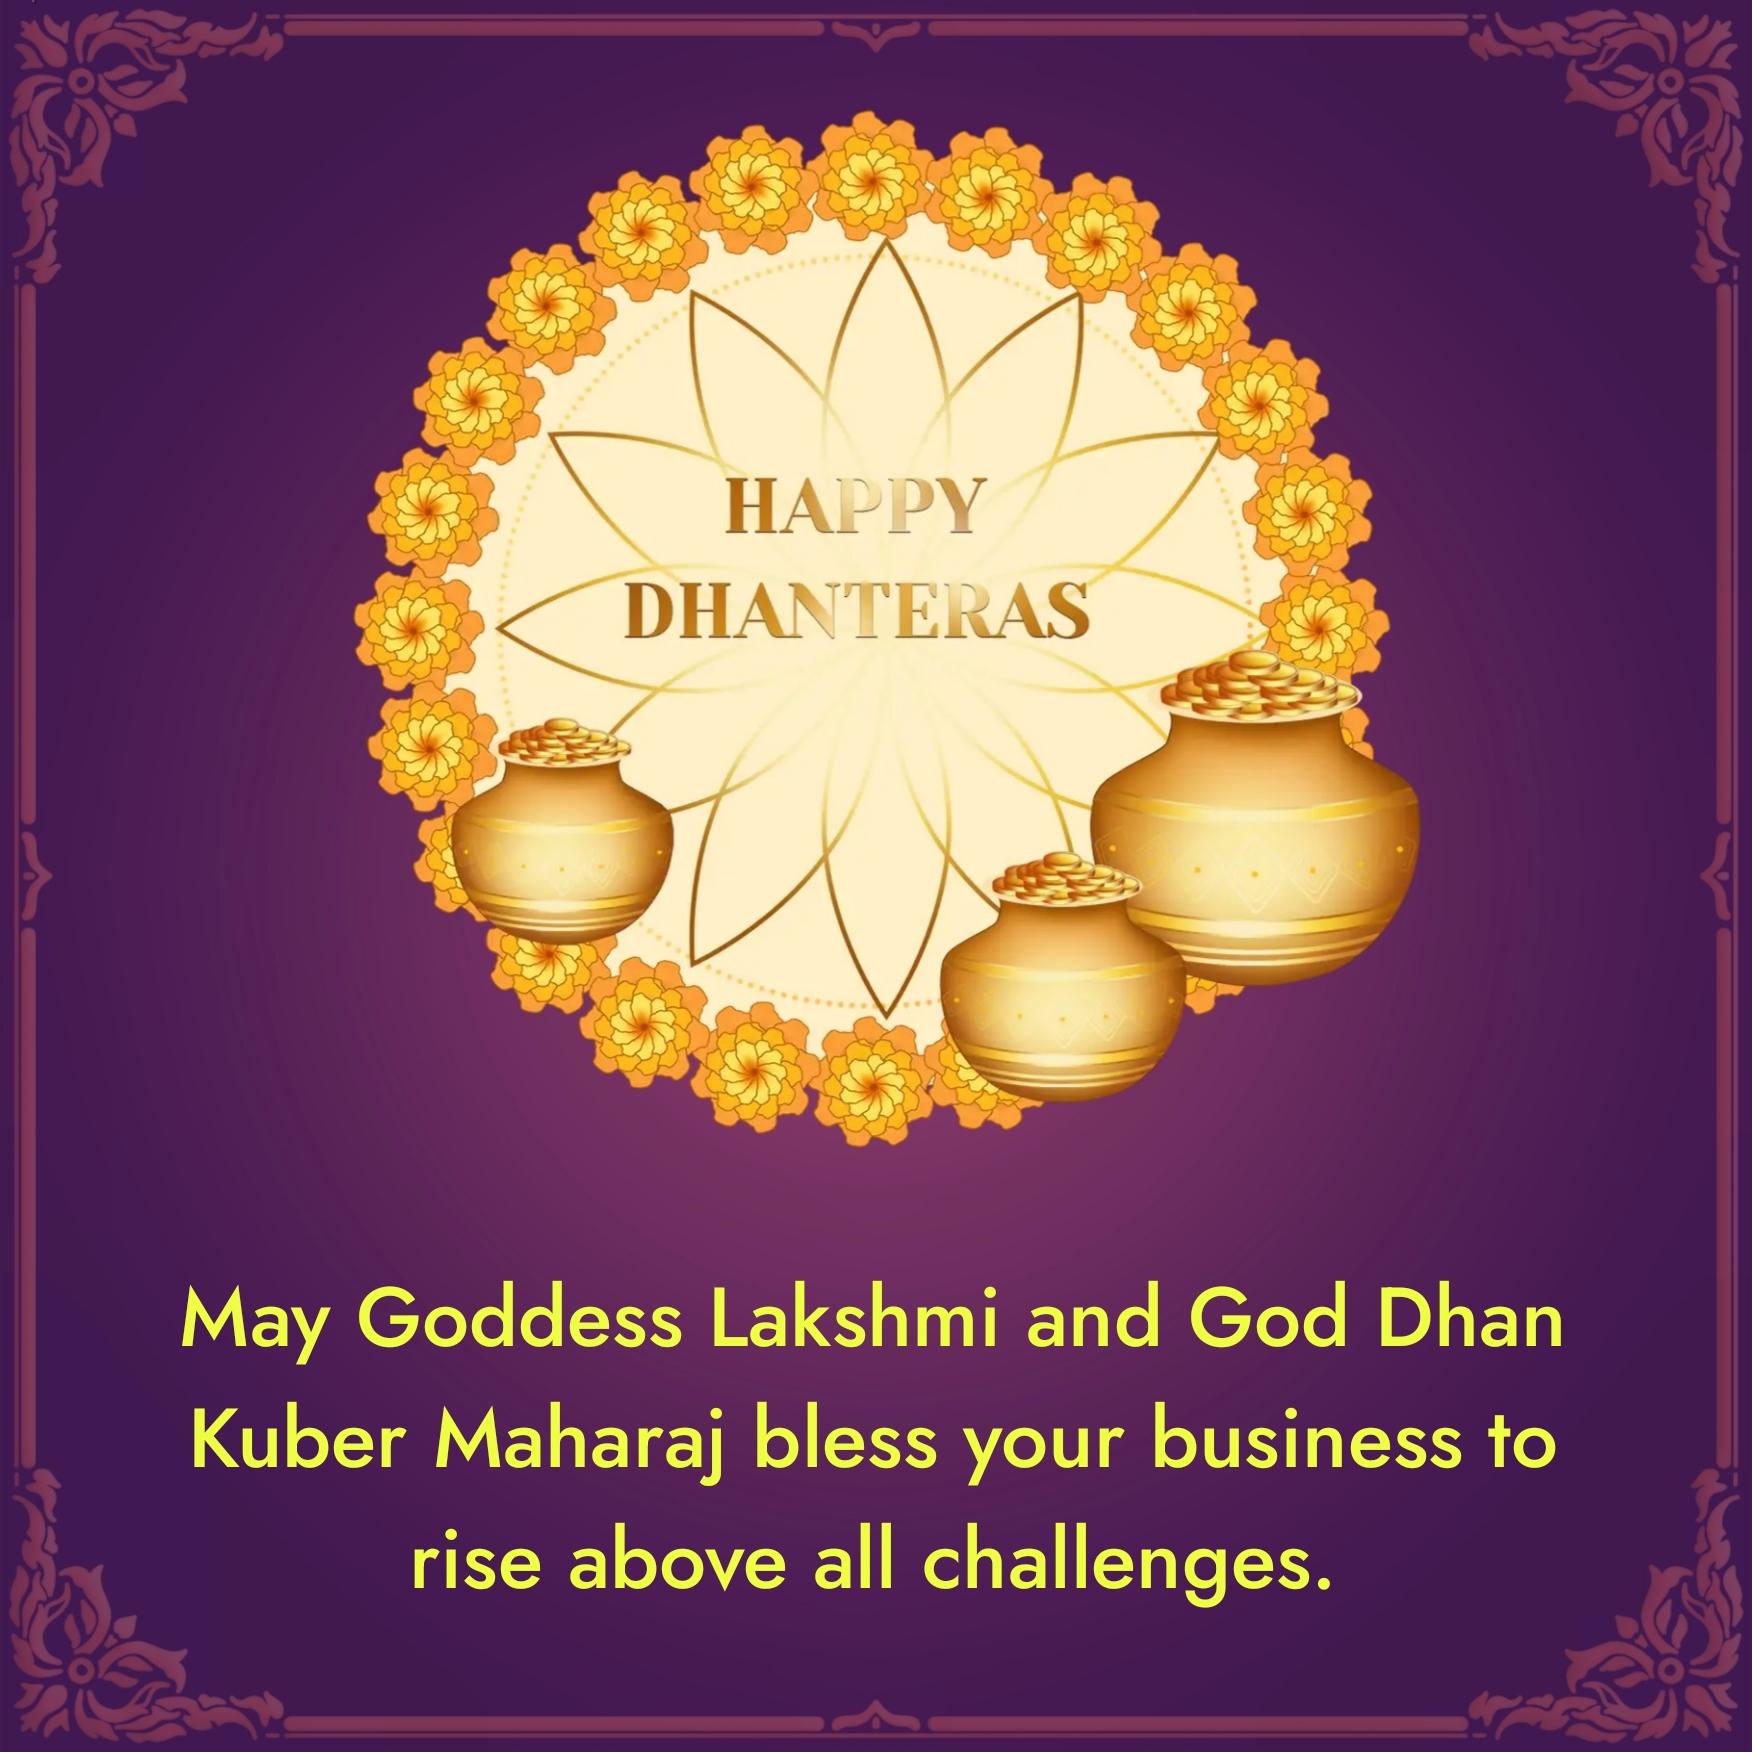 May Goddess Lakshmi and God Dhan Kuber Maharaj